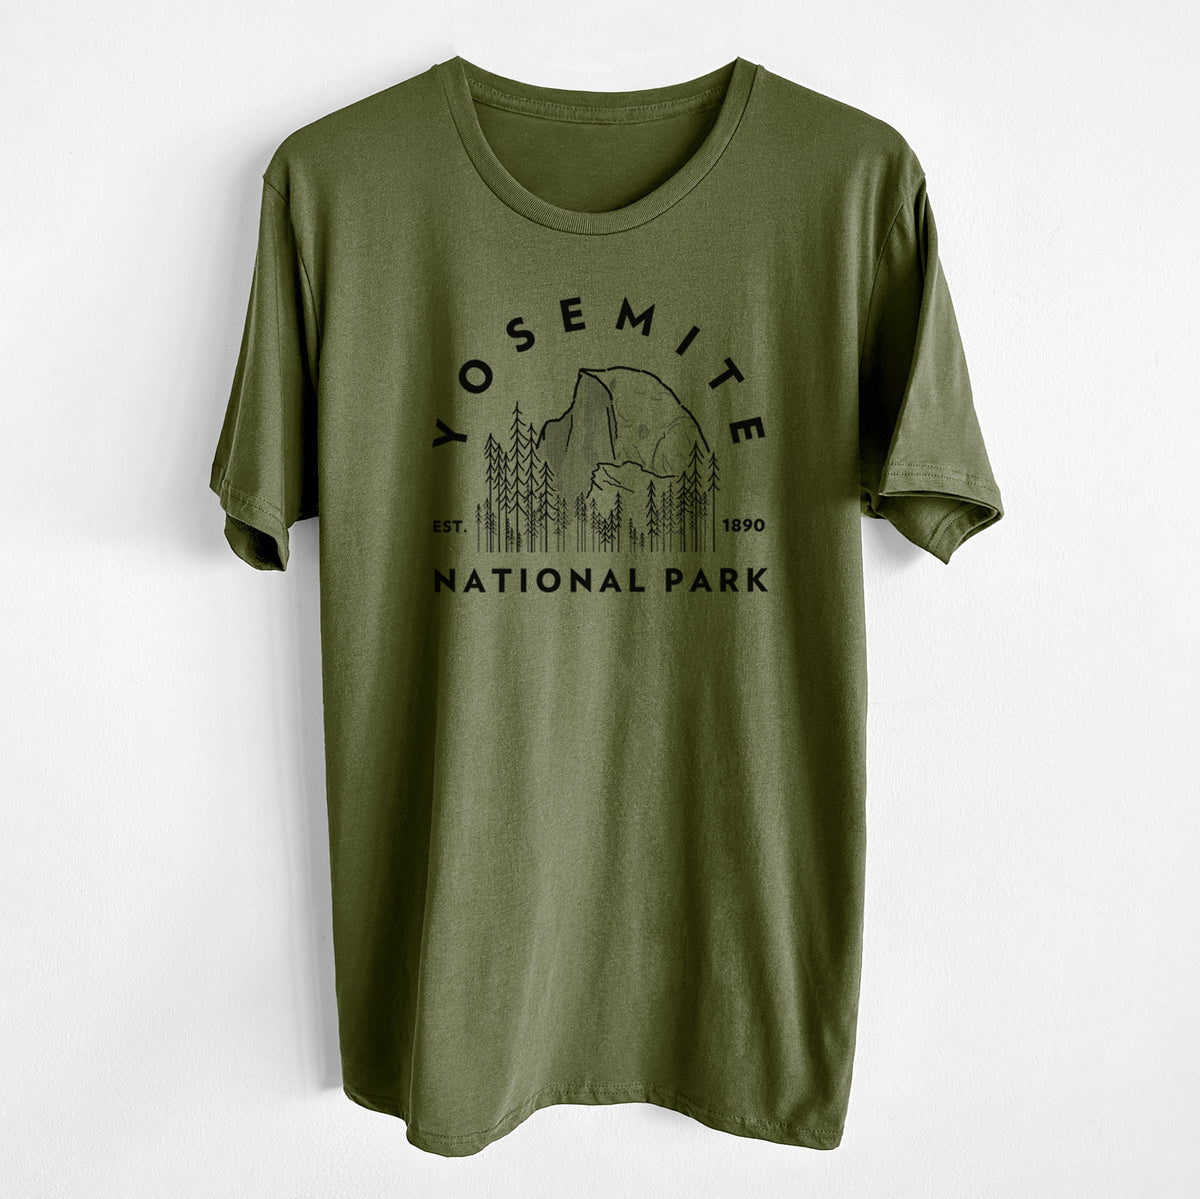 Yosemite National Park - Unisex Crewneck - Made in USA - 100% Organic Cotton